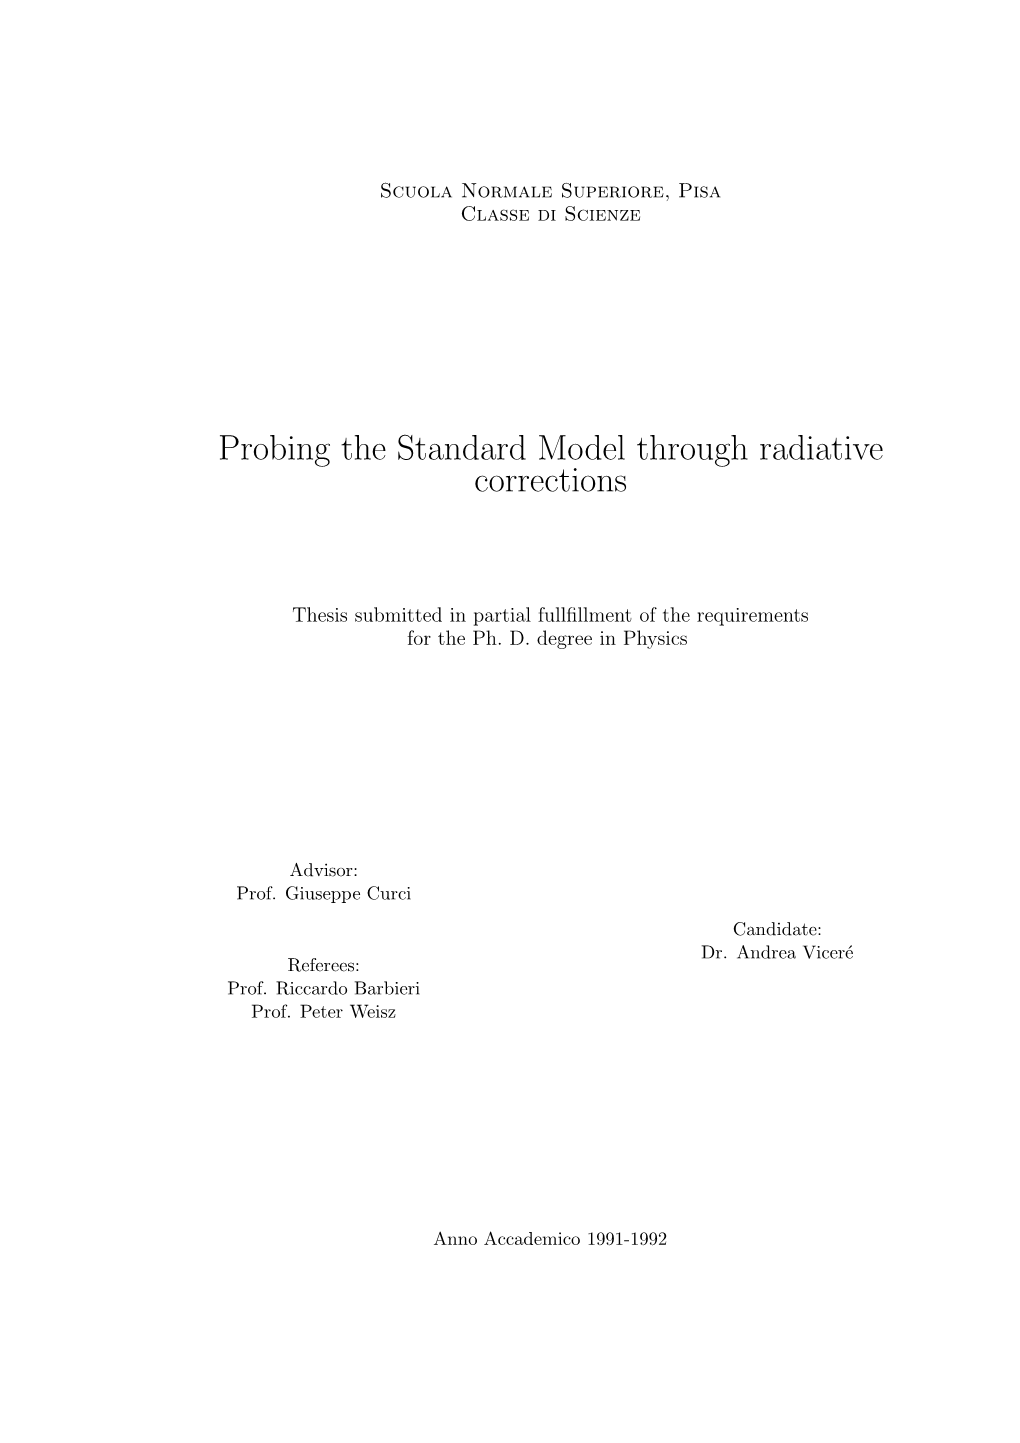 Probing the Standard Model Through Radiative Corrections